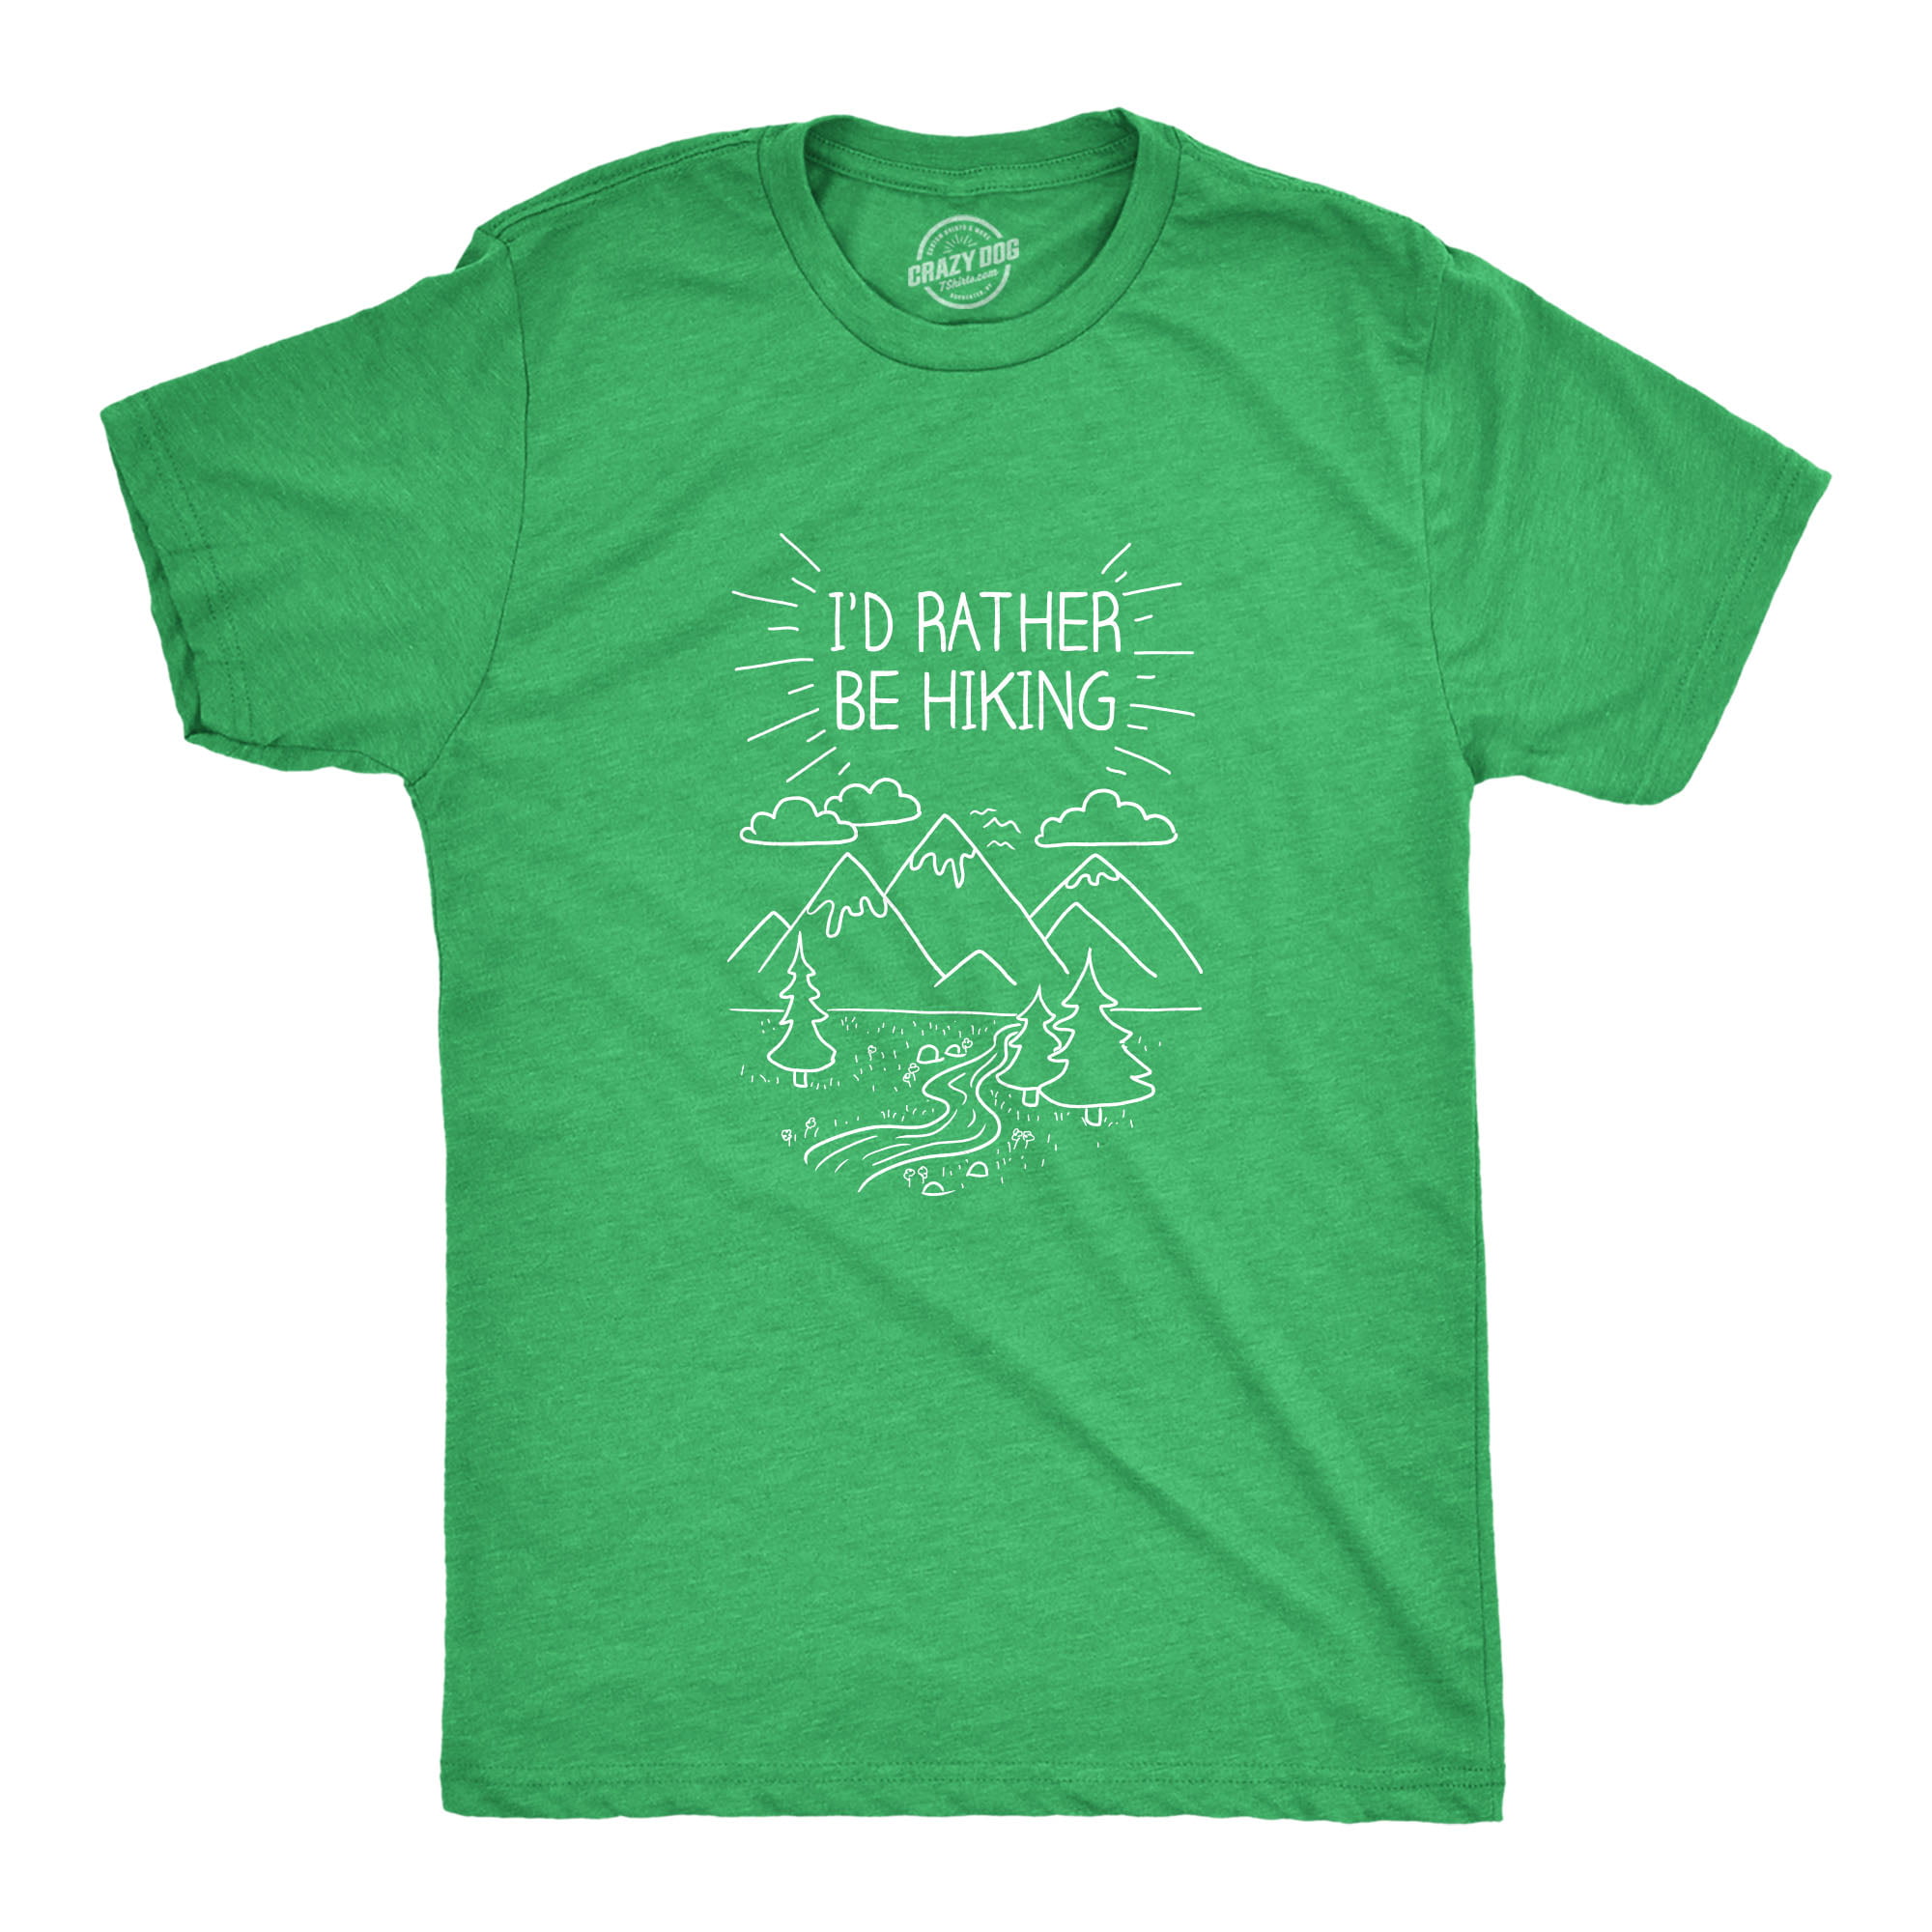 hiking shirt camping shirt Explore shirt explore wilderness shirt graphic tees screen Printed tee adventure shirt